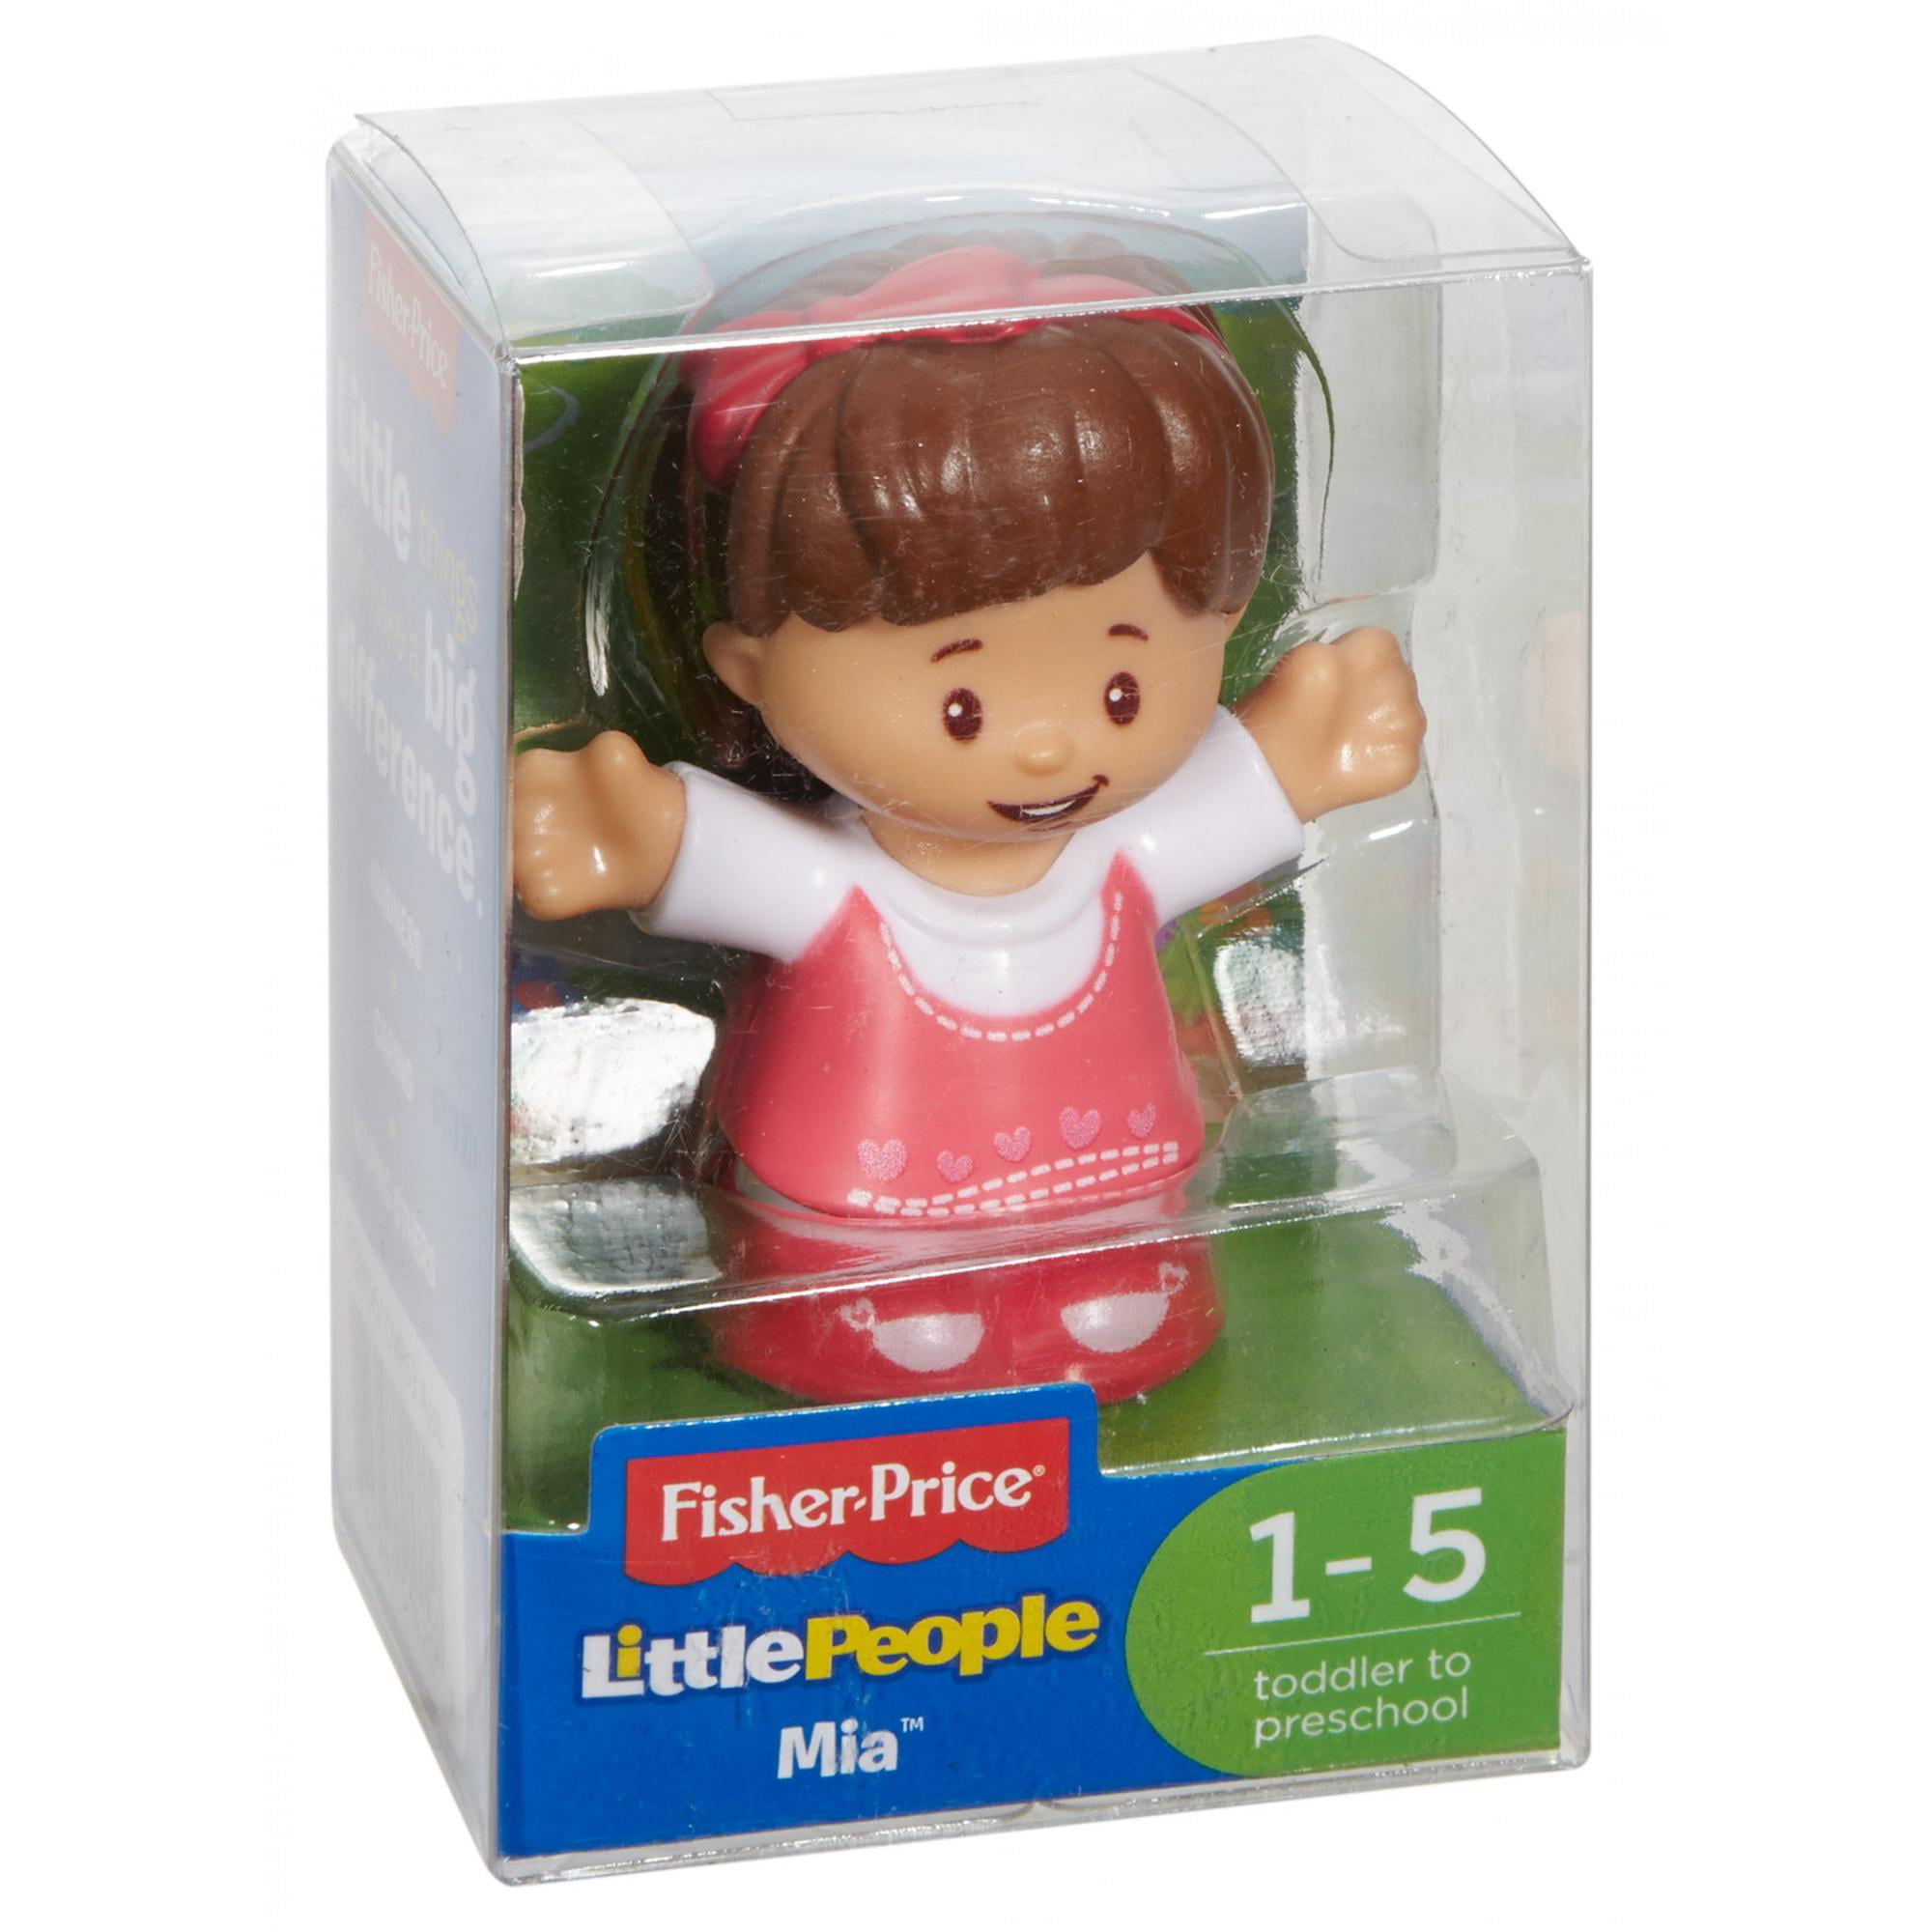 2pcs Fisher-Price Little People Mia & Teddy Bear Figure Girls Dol Toys Gift 